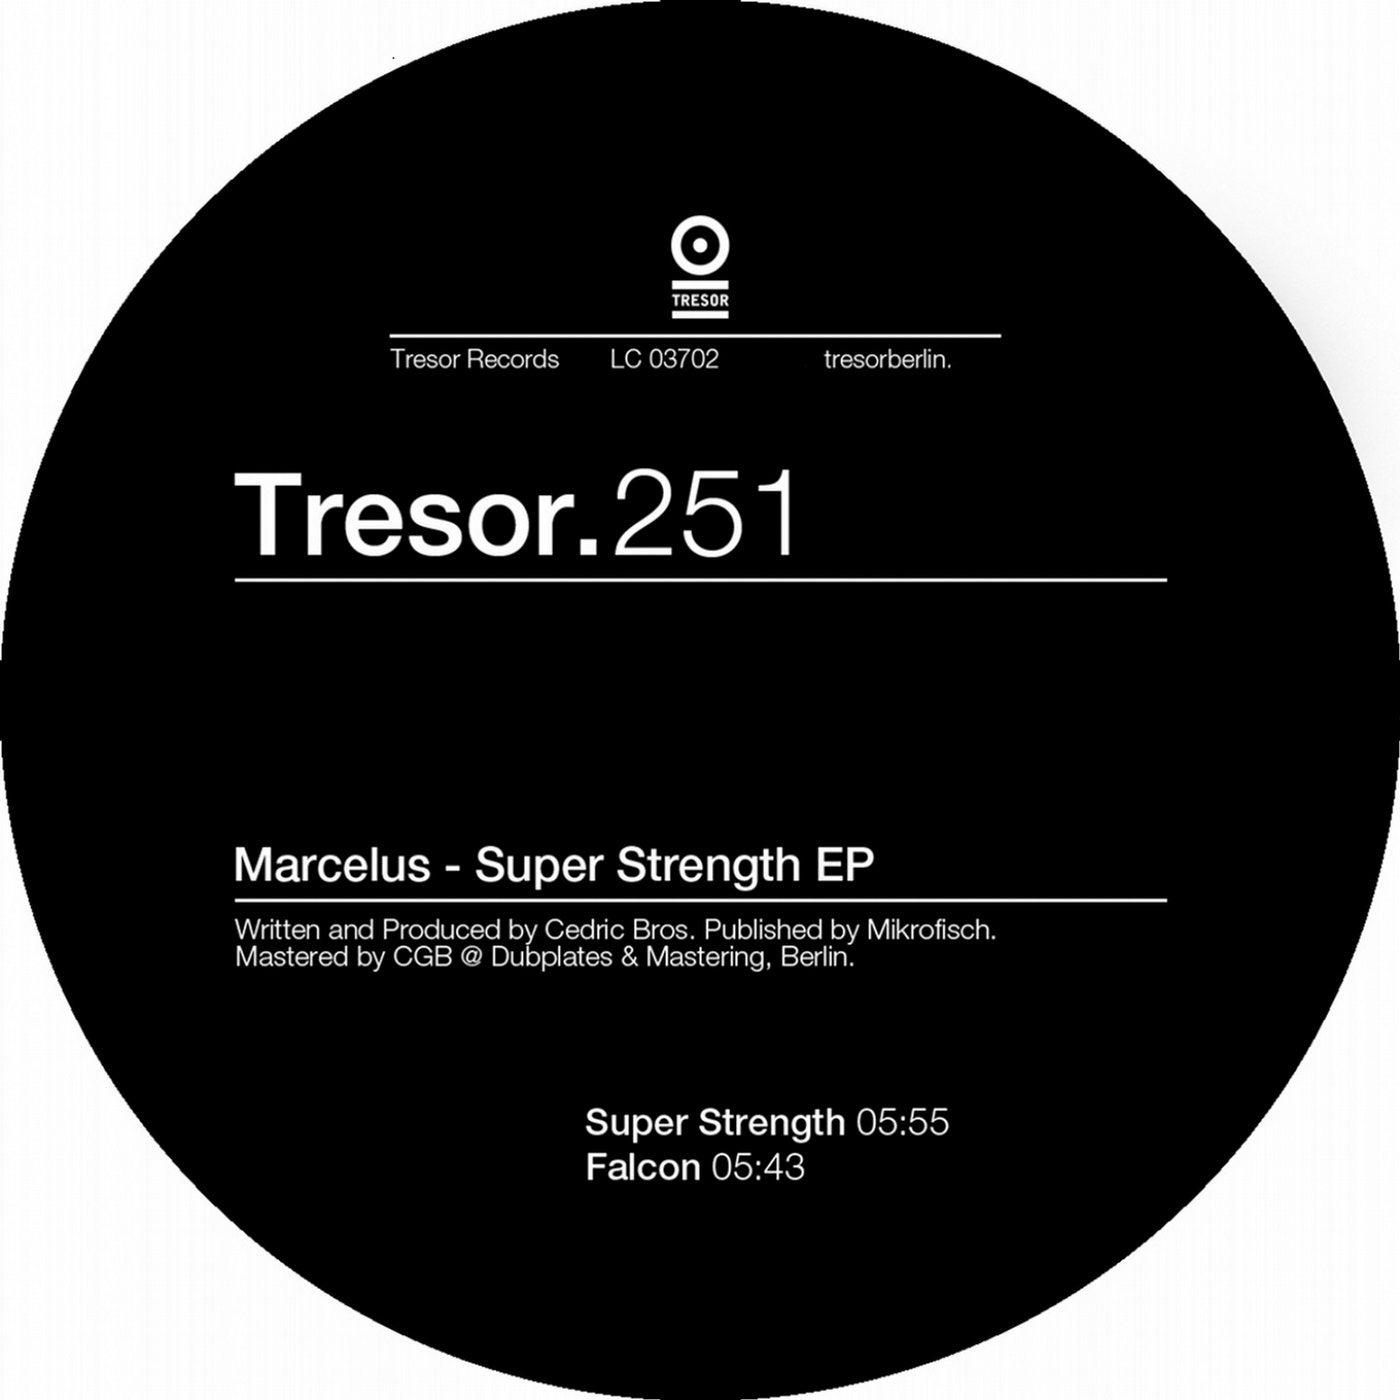 Super Strength EP